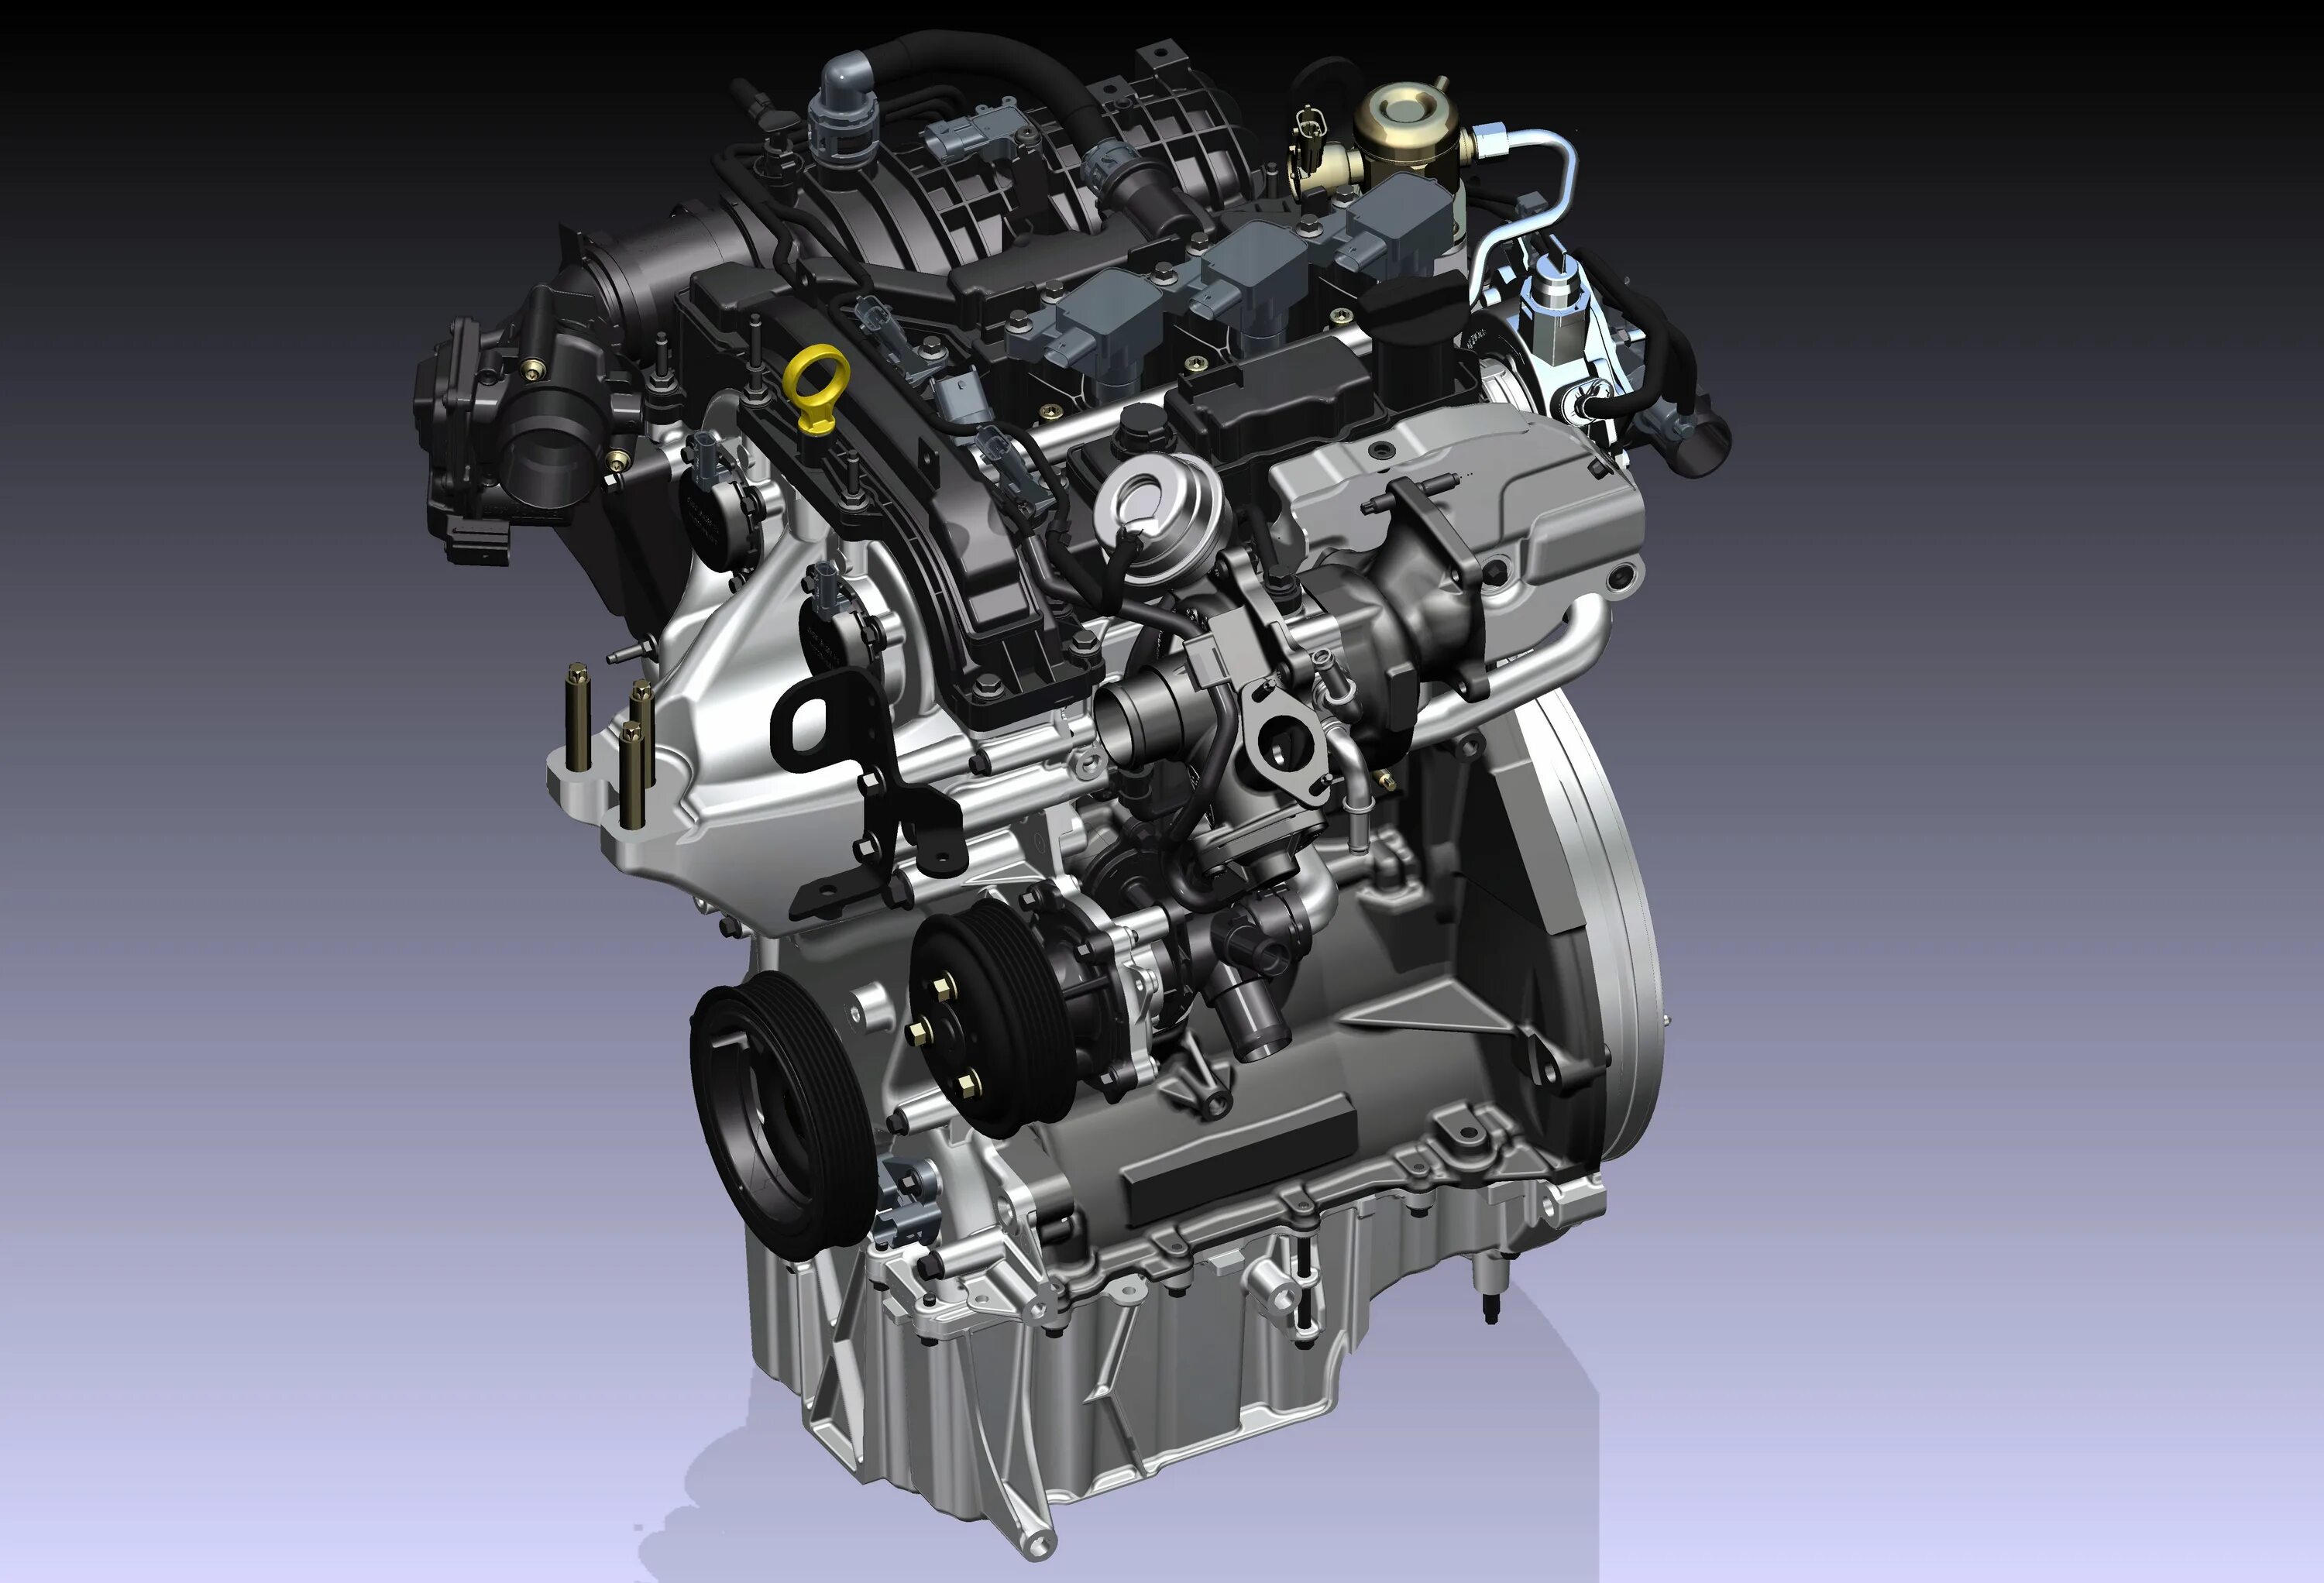 1.3 л 150 л с. Мотор Форд Куга 1.6 экобуст. Двигатель 1.6 экобуст Форд. Форд фокус экобуст 1.6. Ford 3.5 ECOBOOST двигатель.